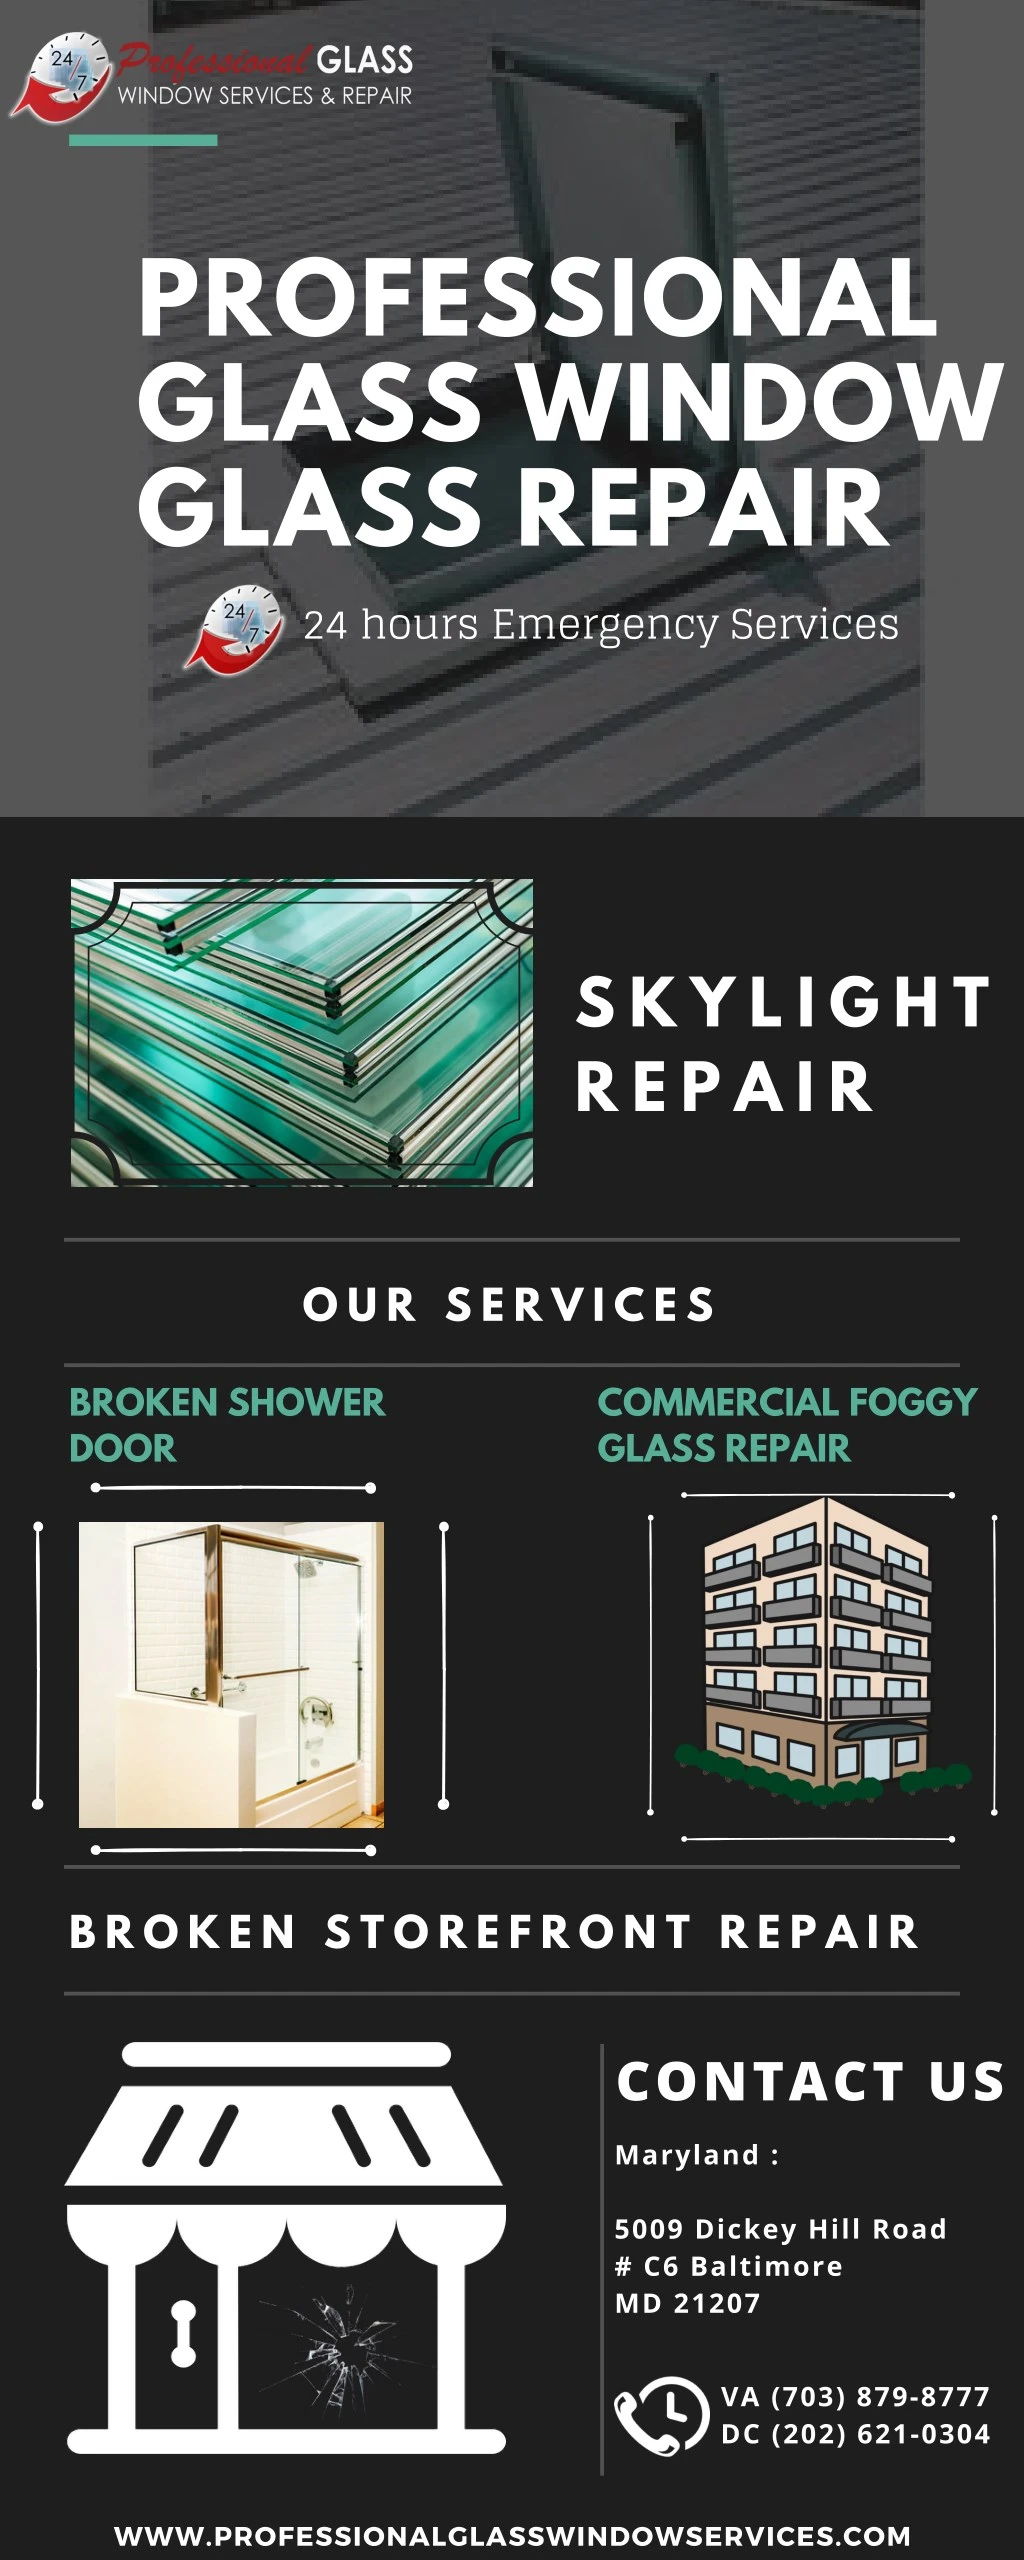 professional glass window glass repair 24 hours